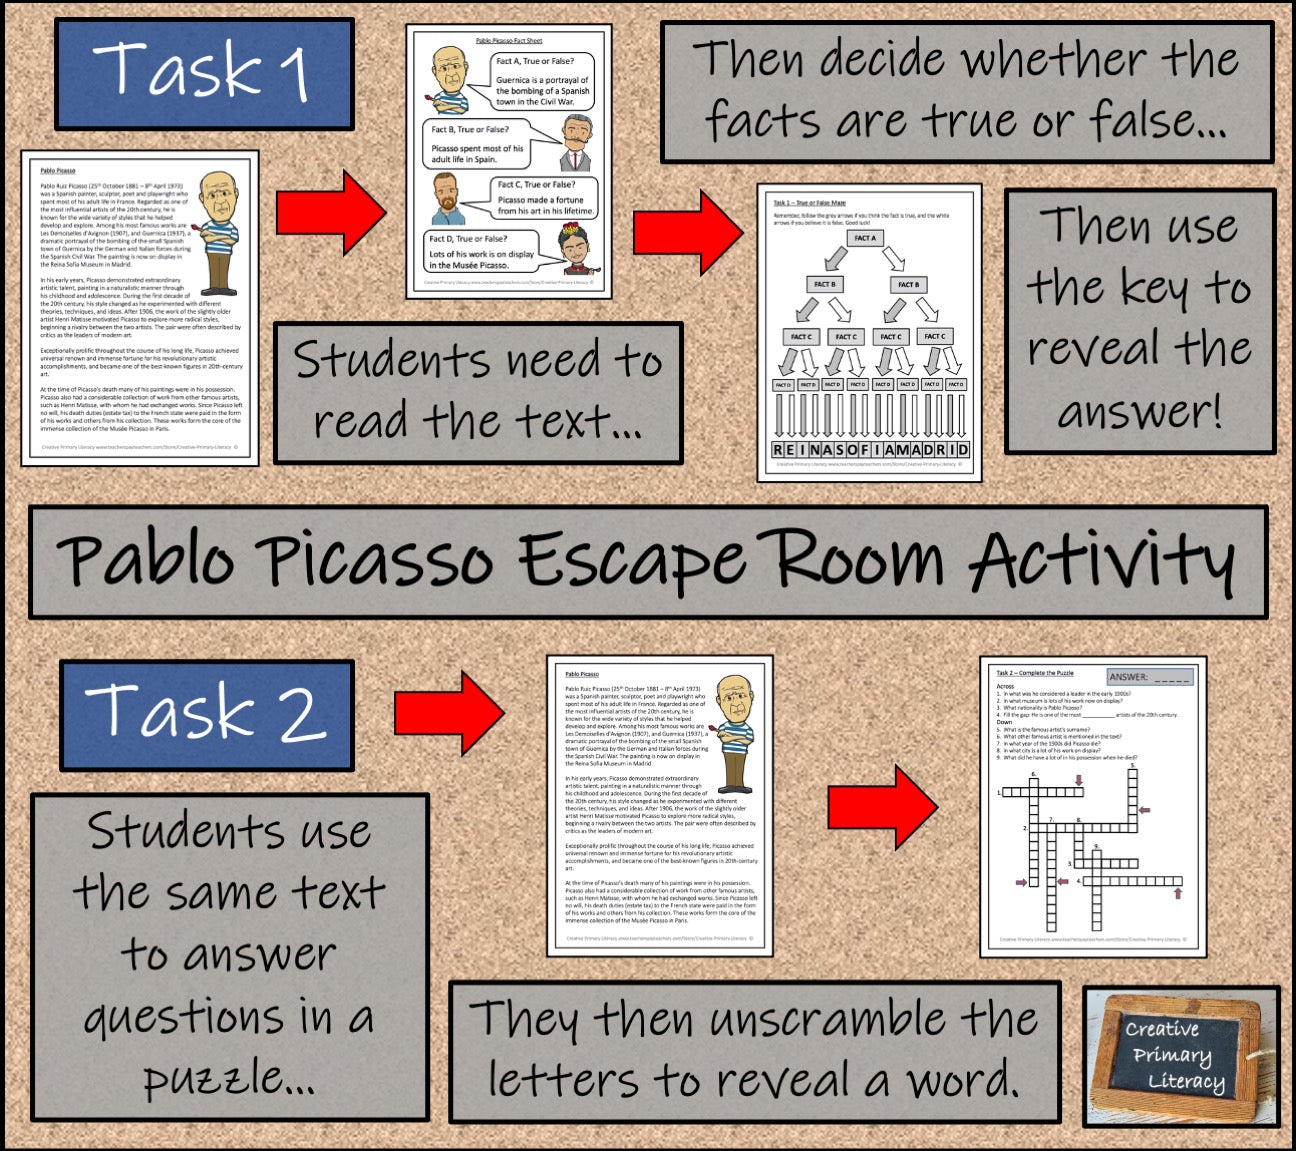 Pablo Picasso Escape Room Activity